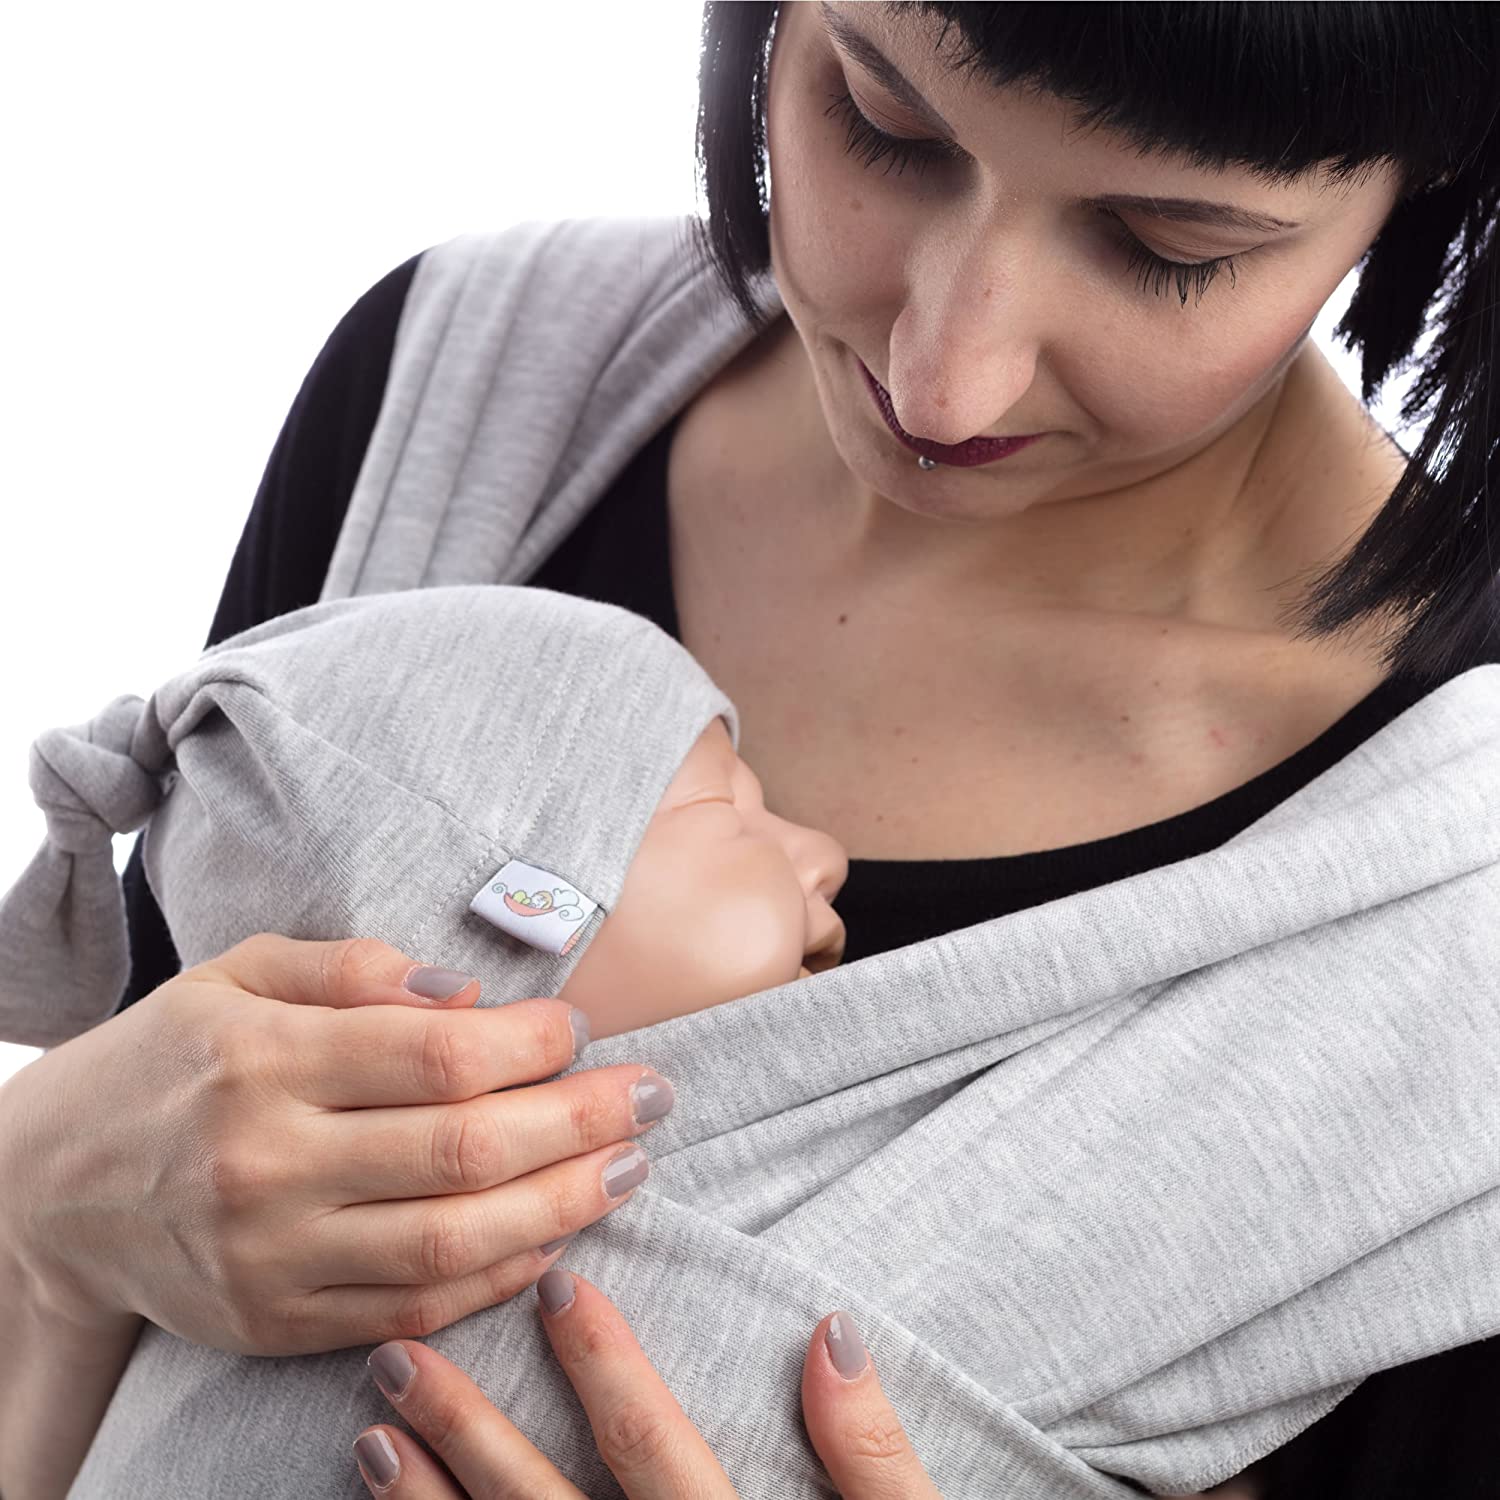 SCHMUSEWOLKE Flexi Baby Sling Newborn Mottled Grey Cotton 56 x 500 cm Baby Size 0-6 Months 2.8-8 kg Belly Carrier